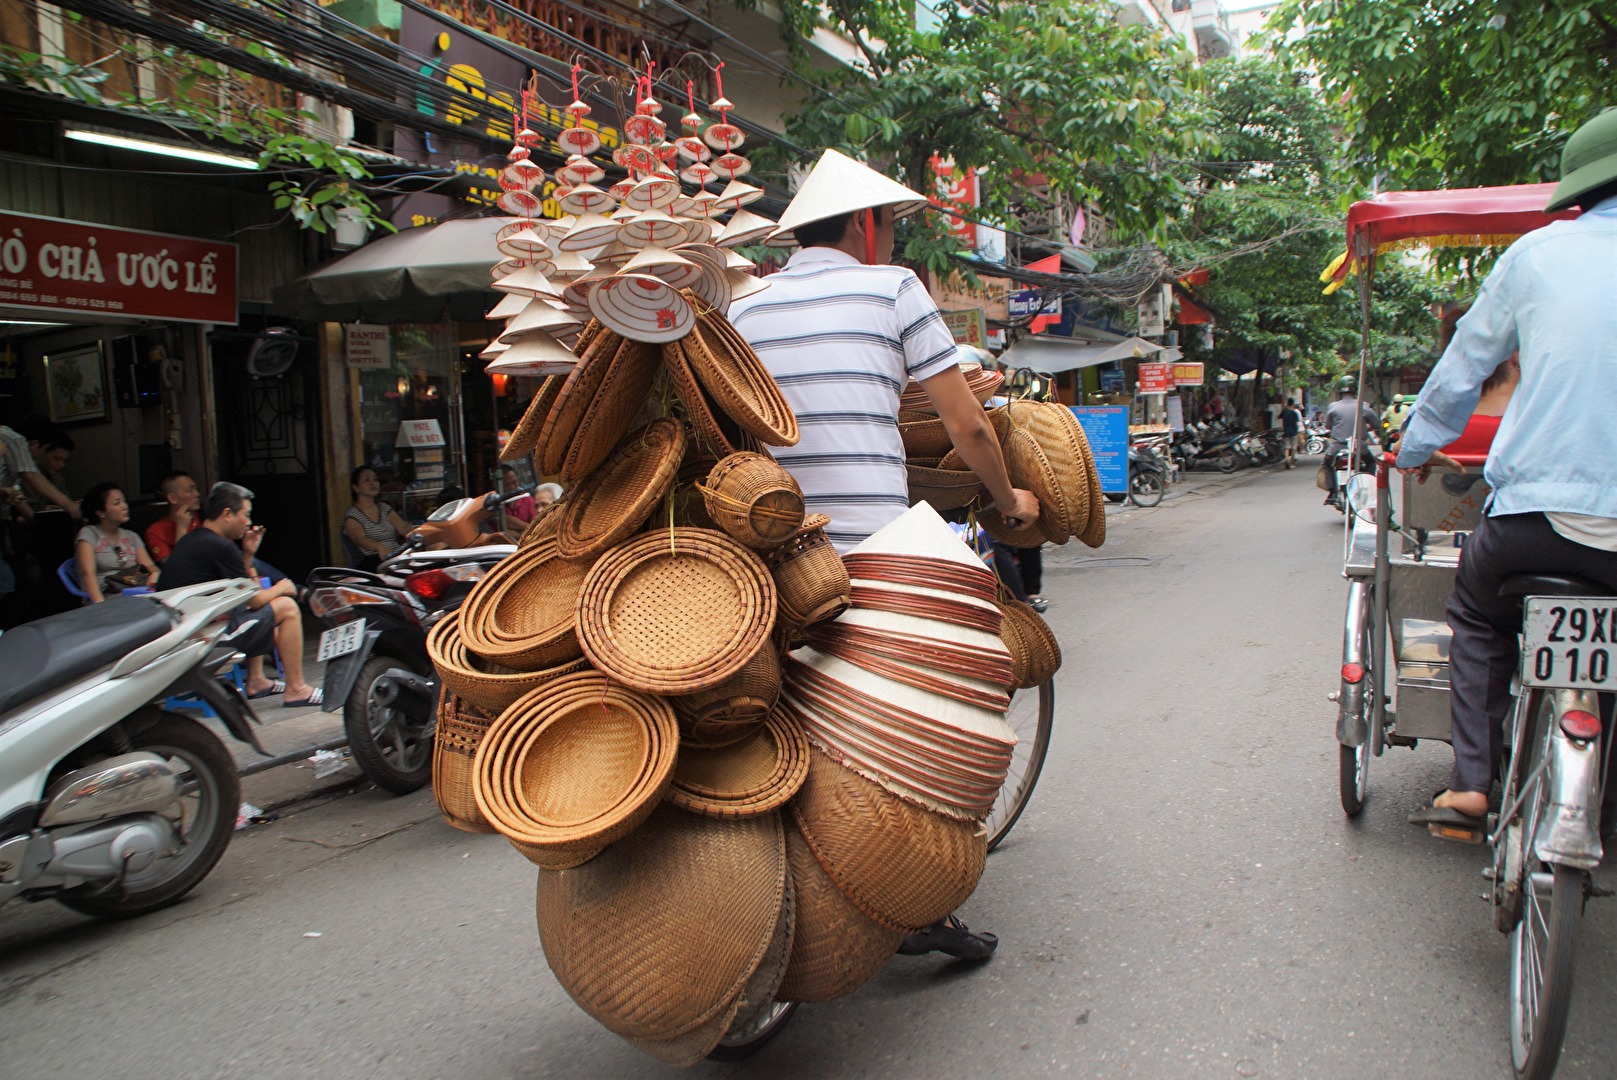 Transport in Hanoi